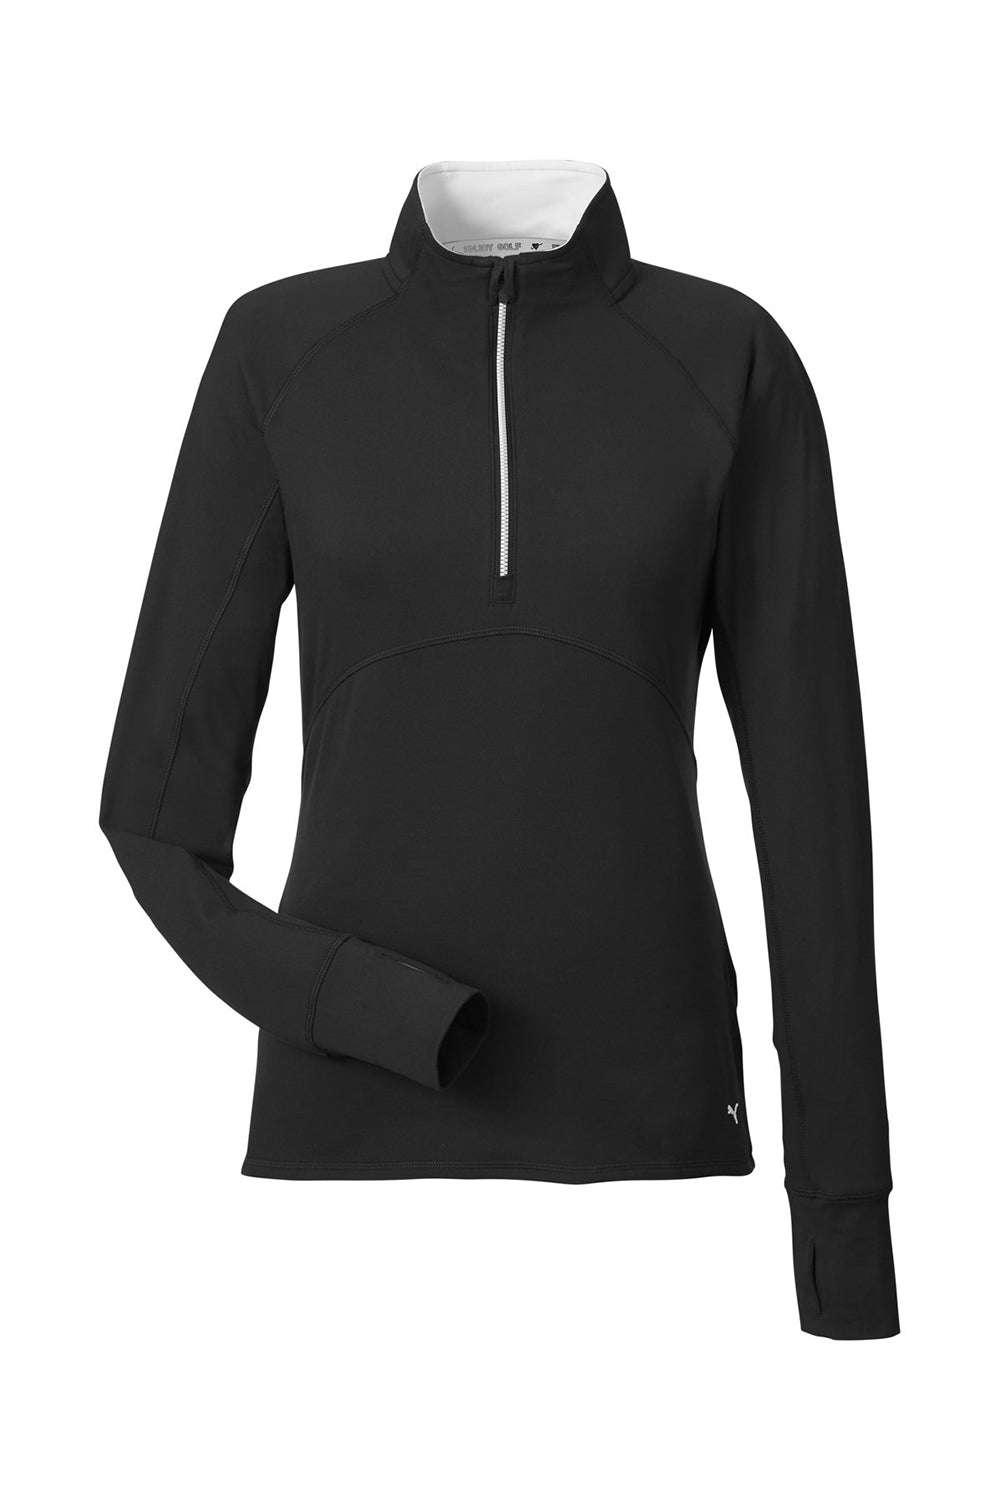 Puma 533007 Womens Gamer 1/4 Zip Sweatshirt Black Flat Front